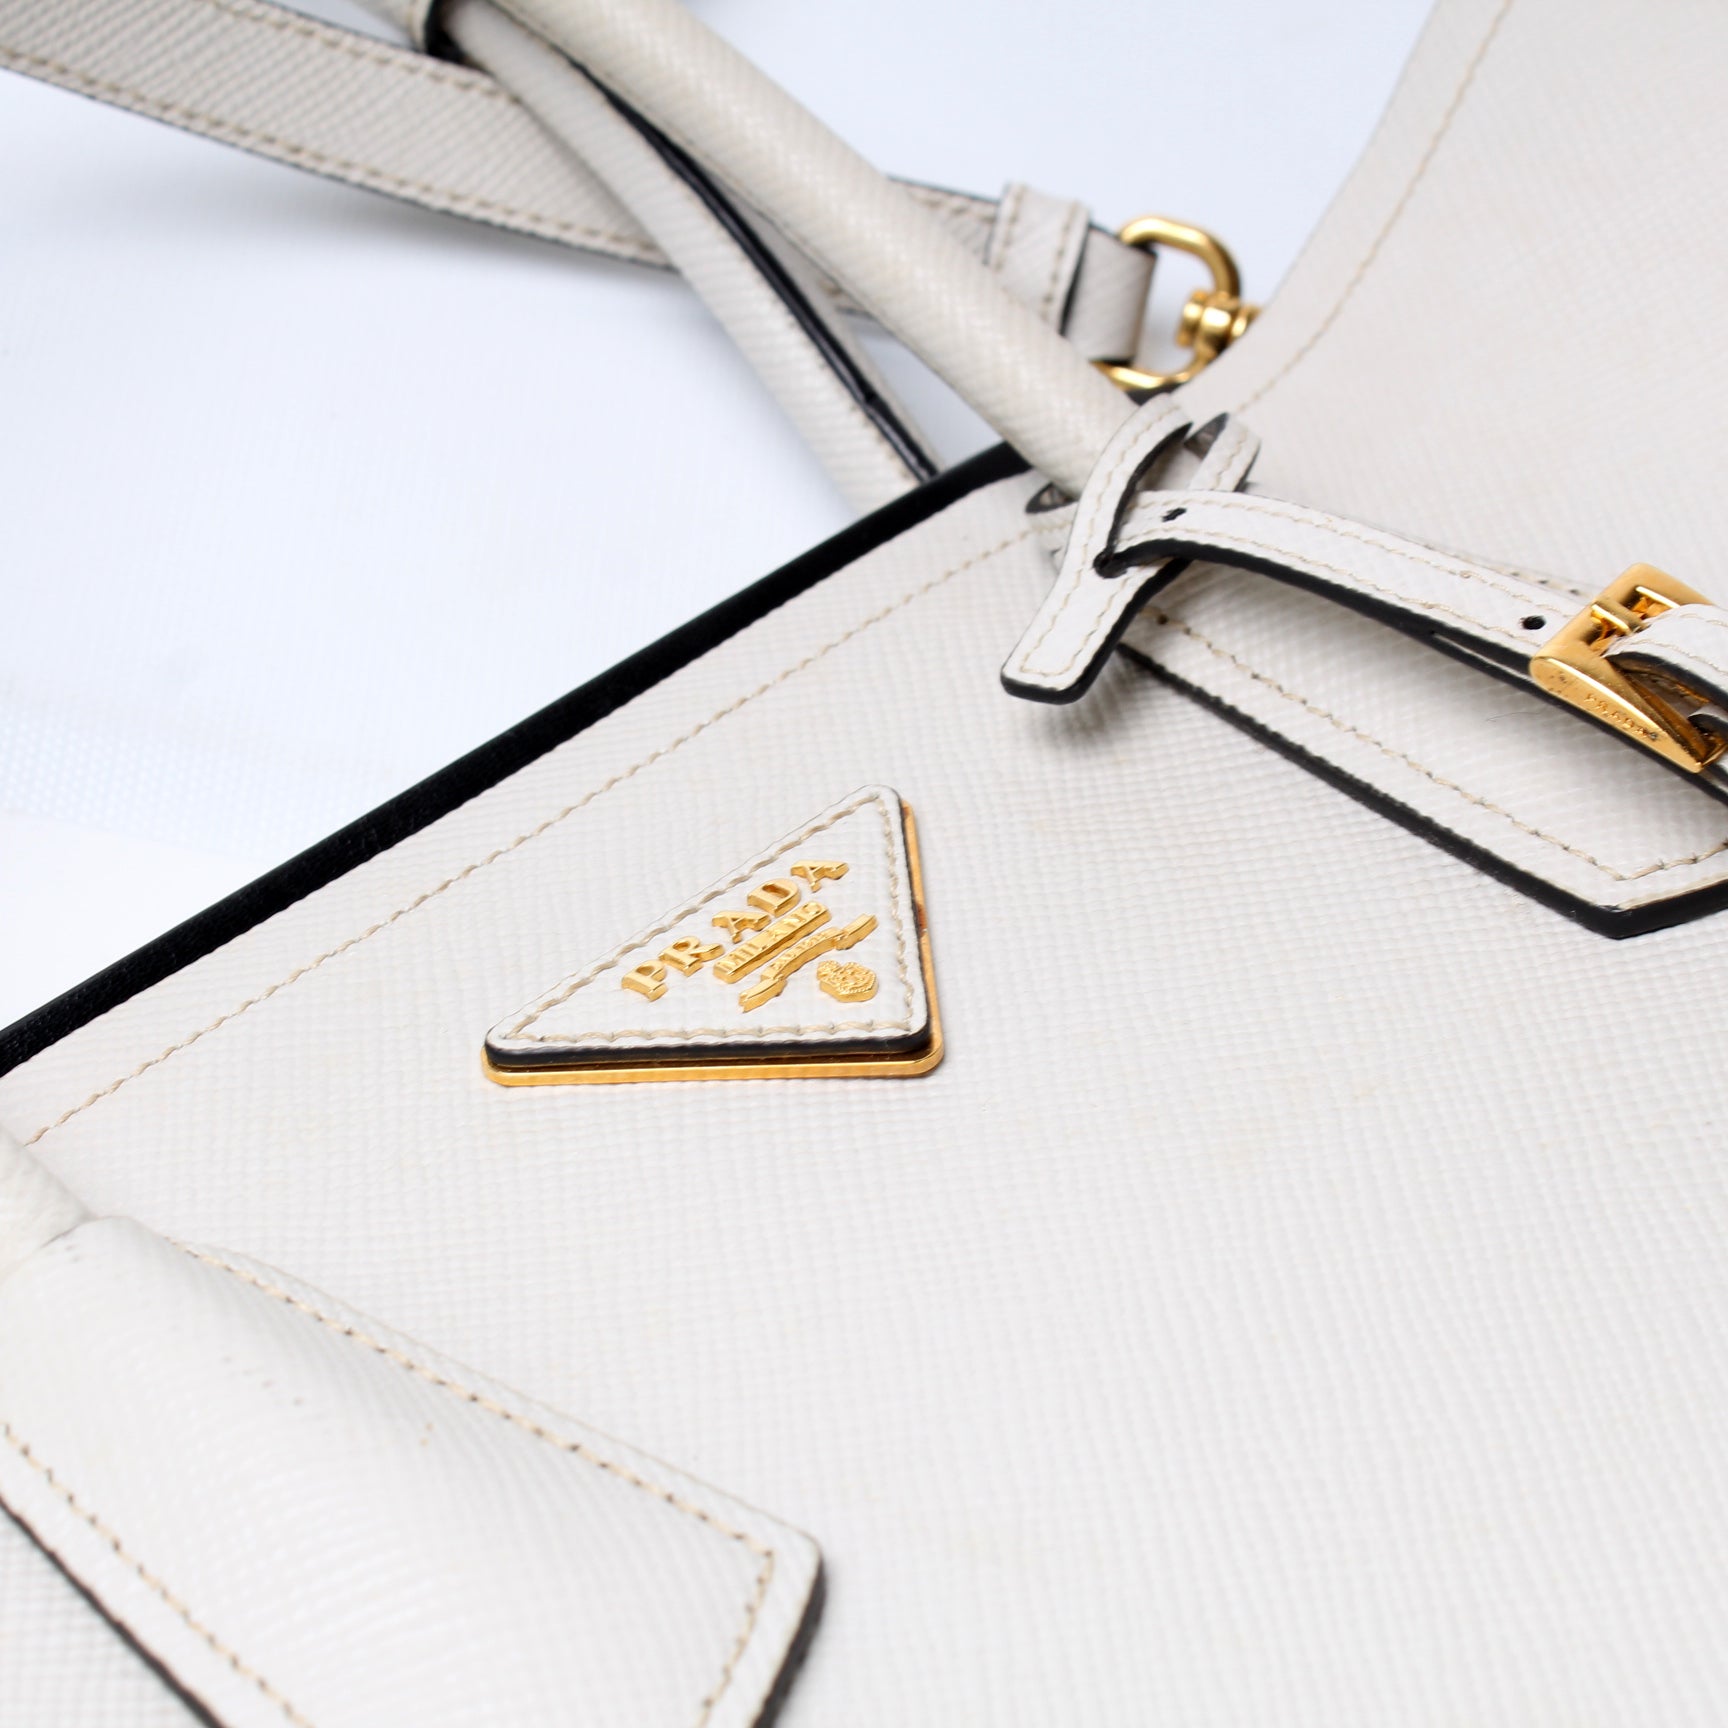 Saffiano Cuir Double Large 1BG756 – Keeks Designer Handbags